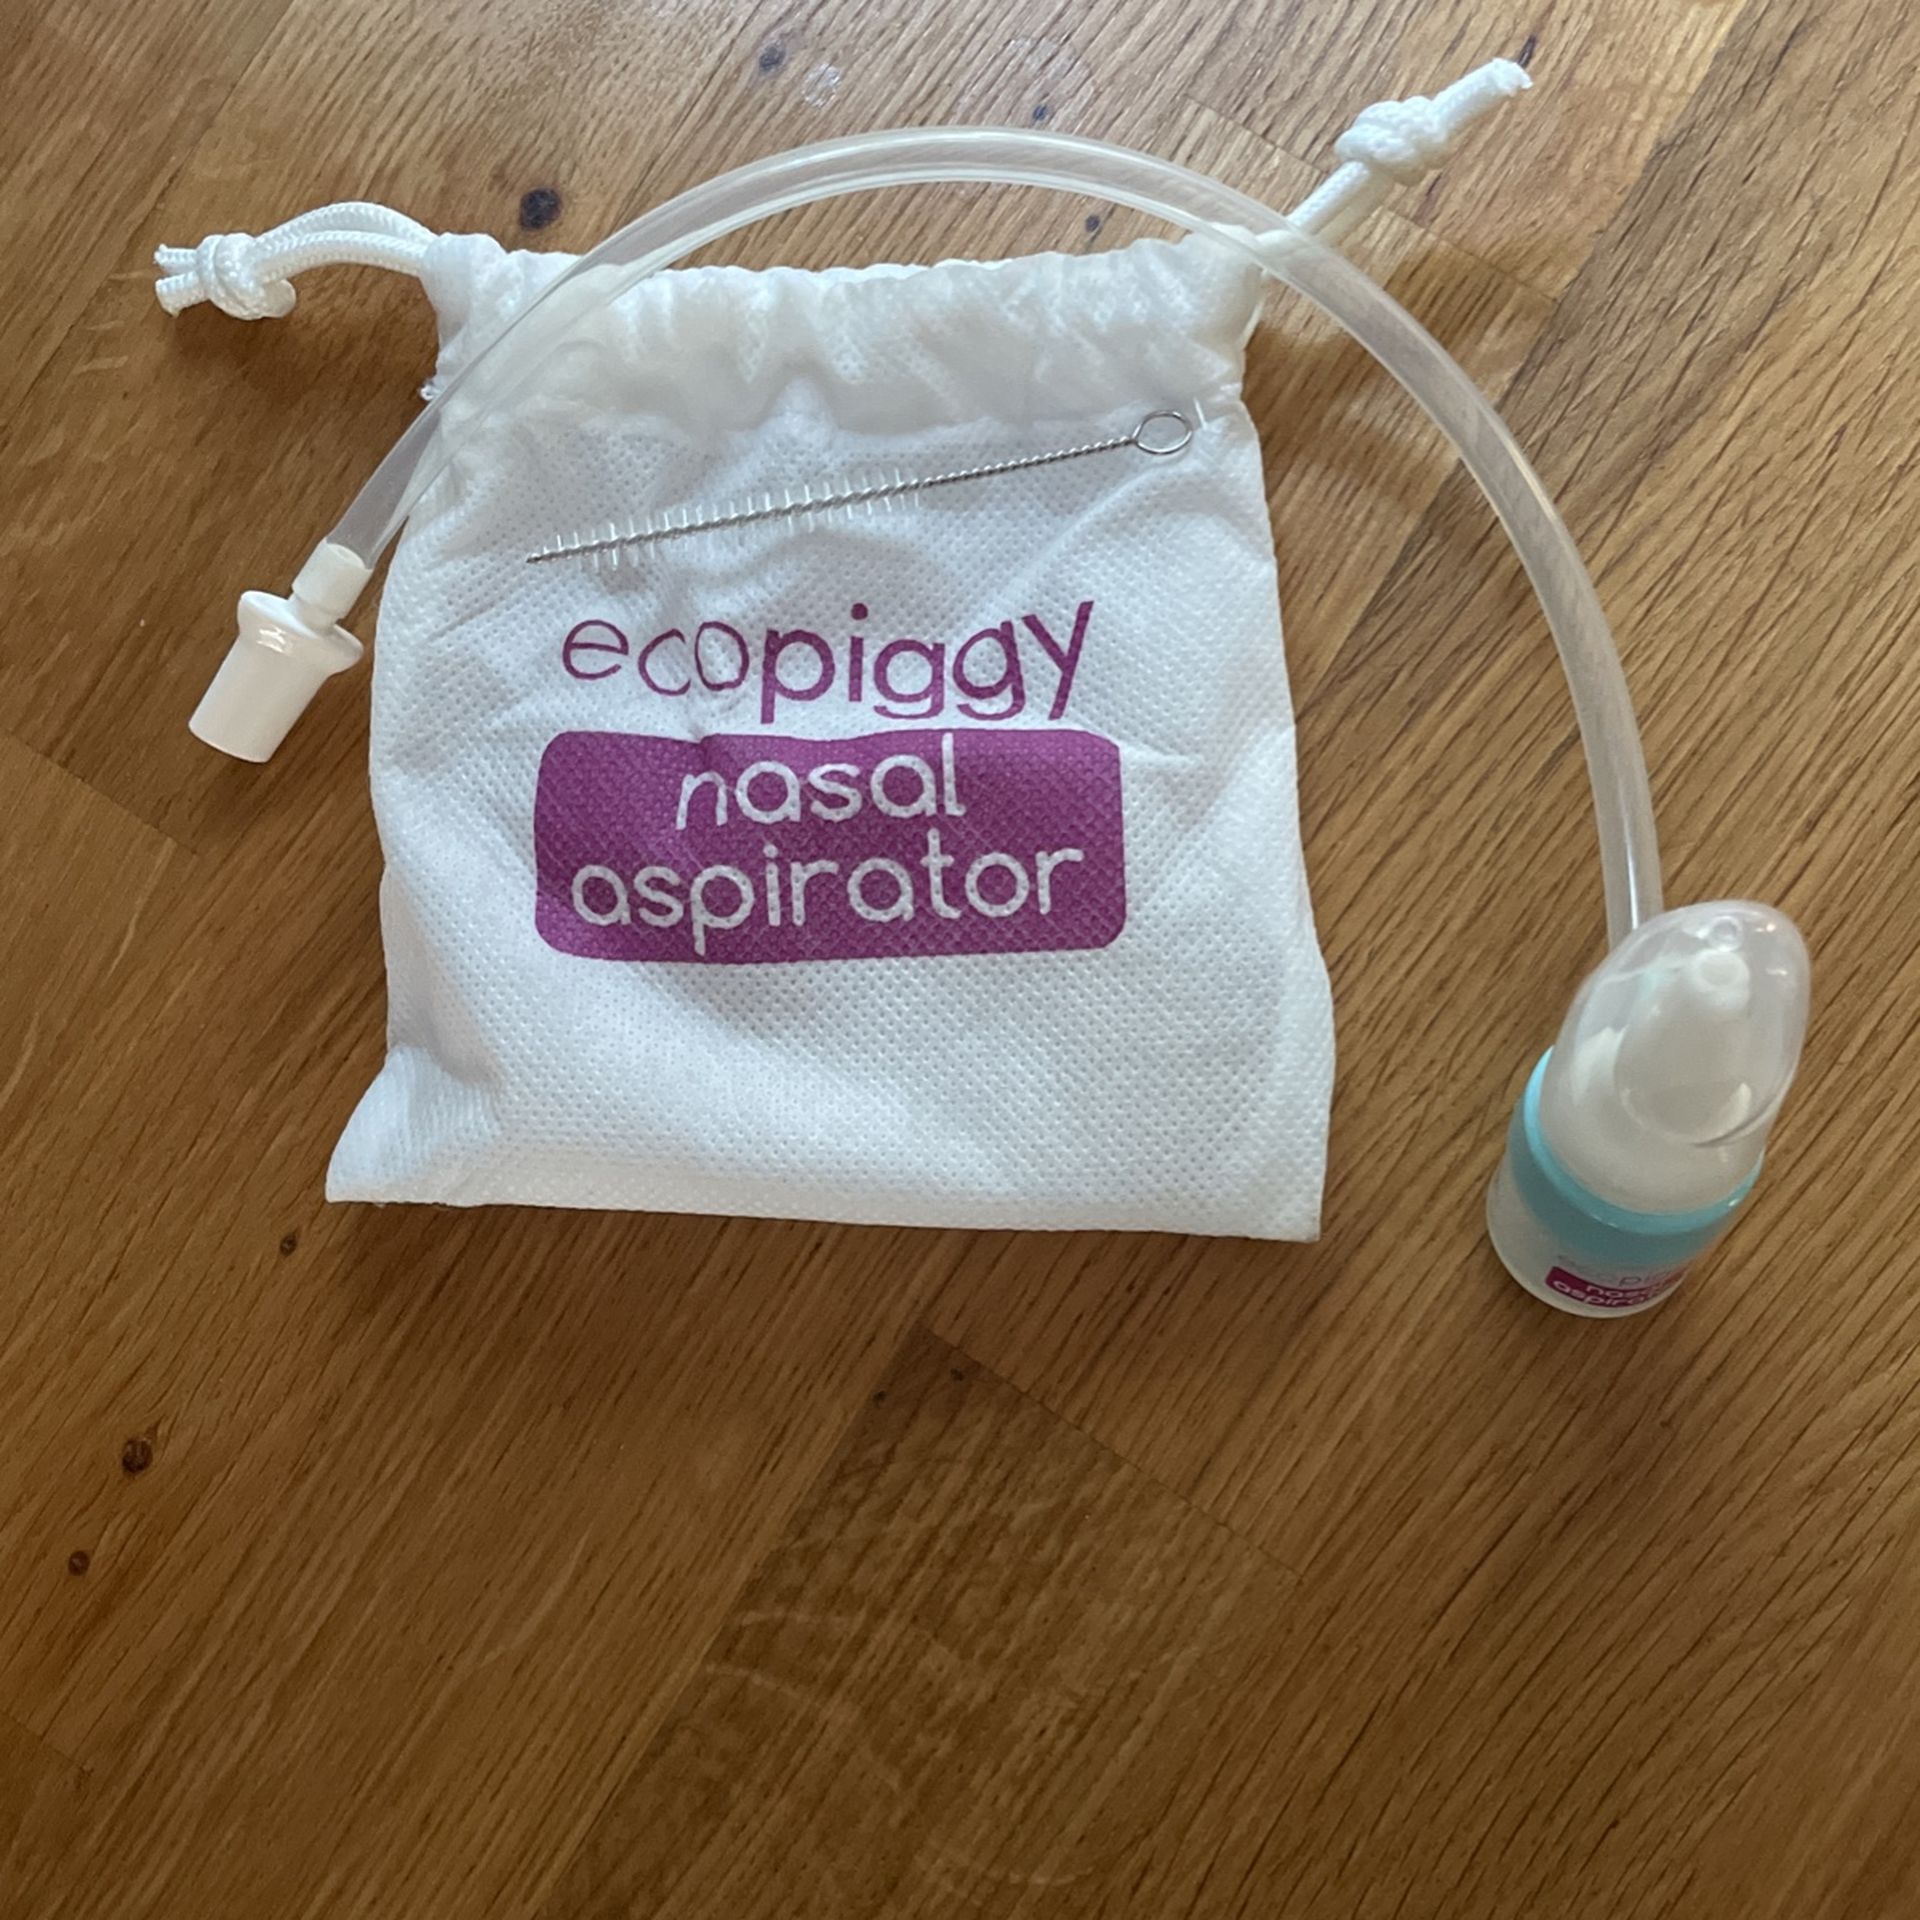 Ecopiggy Nasal Aspirator NEW, Never Used 